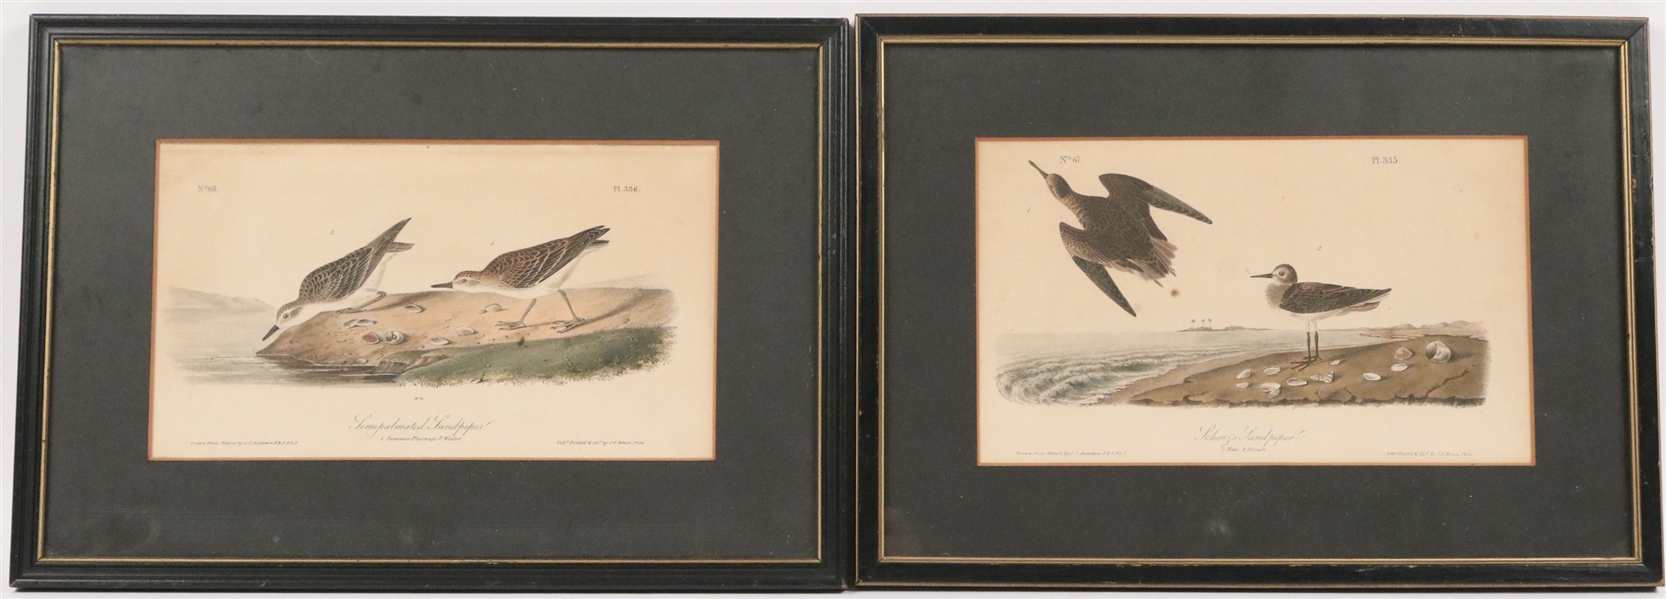 John James Audubon Octavo Edition Engraving